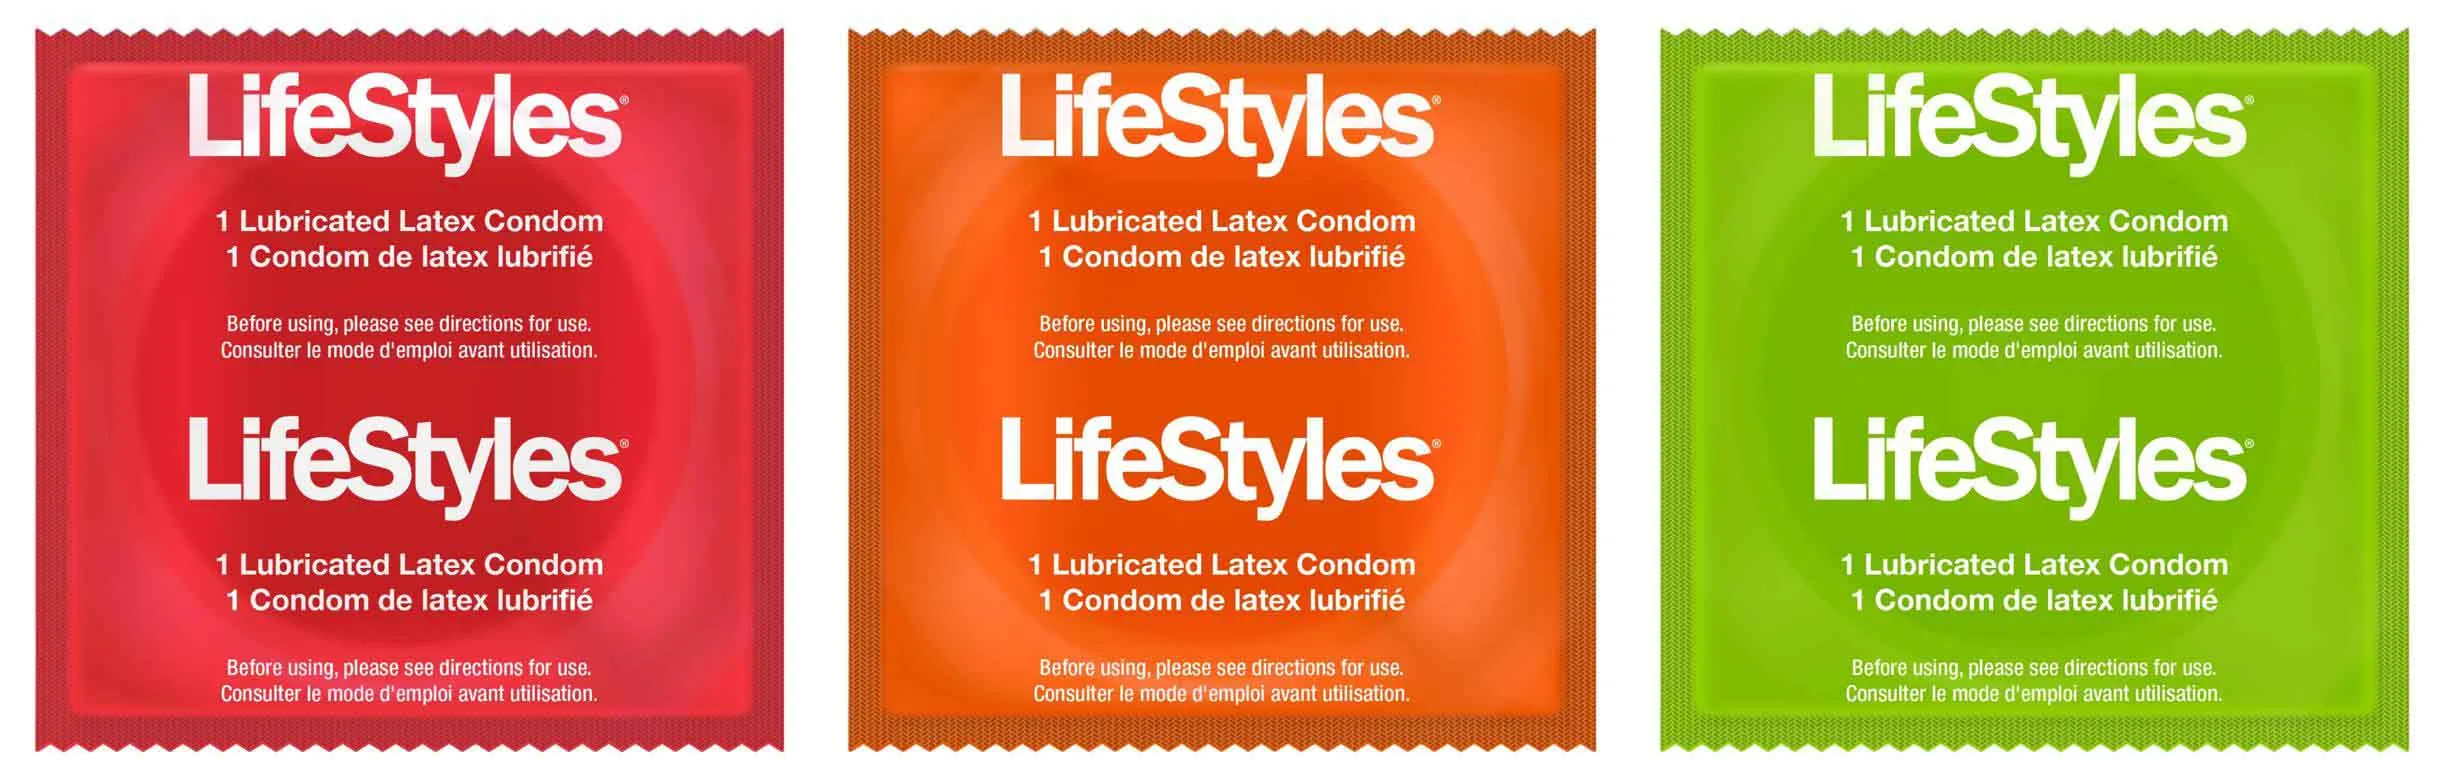 Lifestyle Condoms